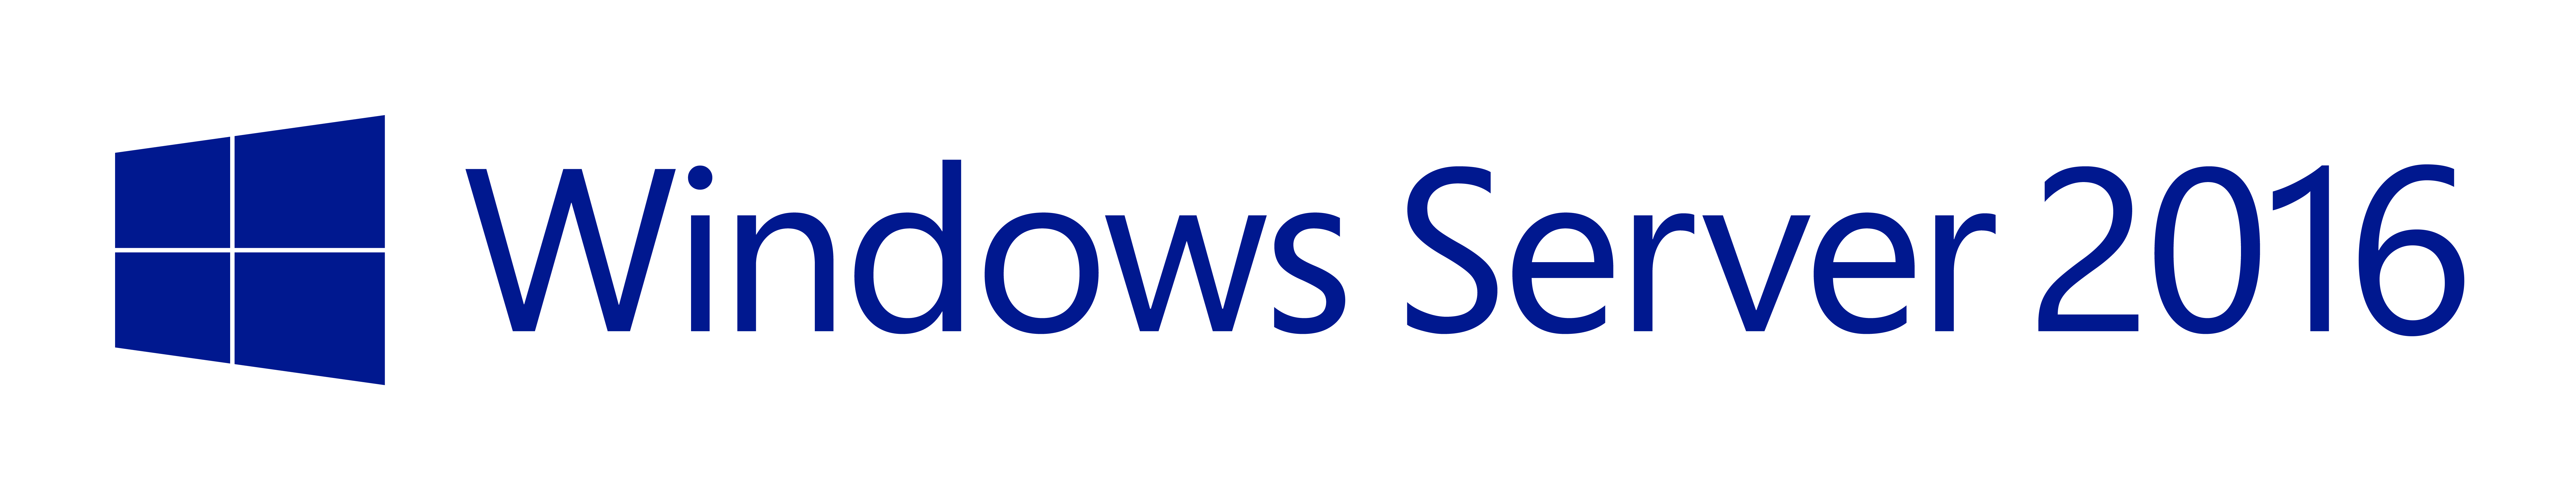 Windows Server Logo - File:Windows-server-2016.png - Wikimedia Commons